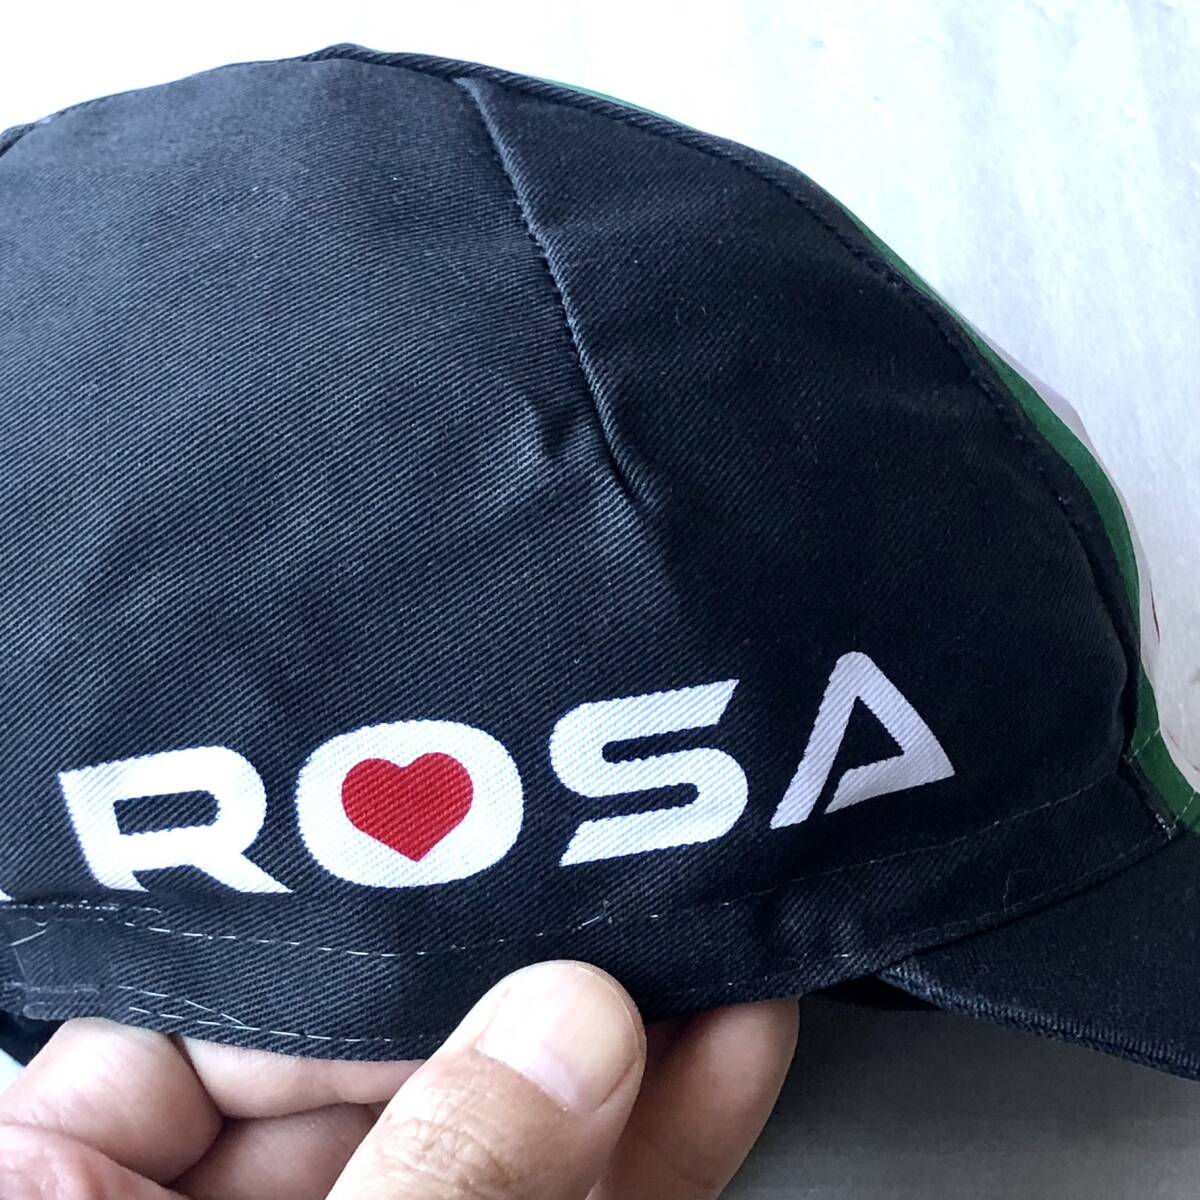  new goods DE ROSA Italian flag cycle cap black free shipping 